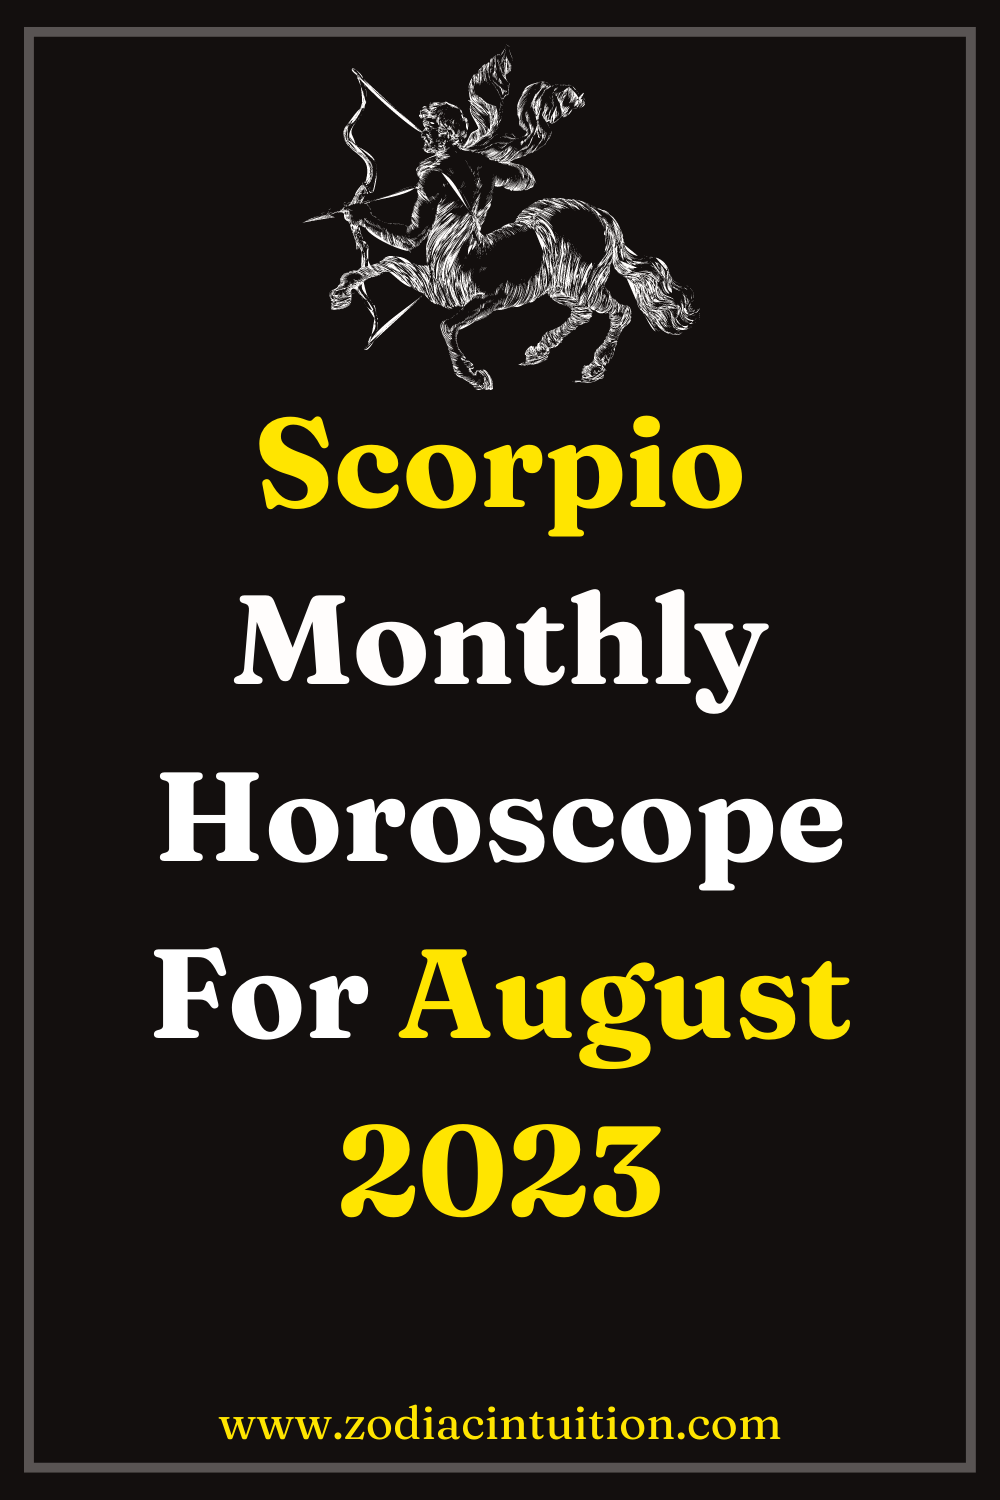 Scorpio monthly horoscope for August 2023